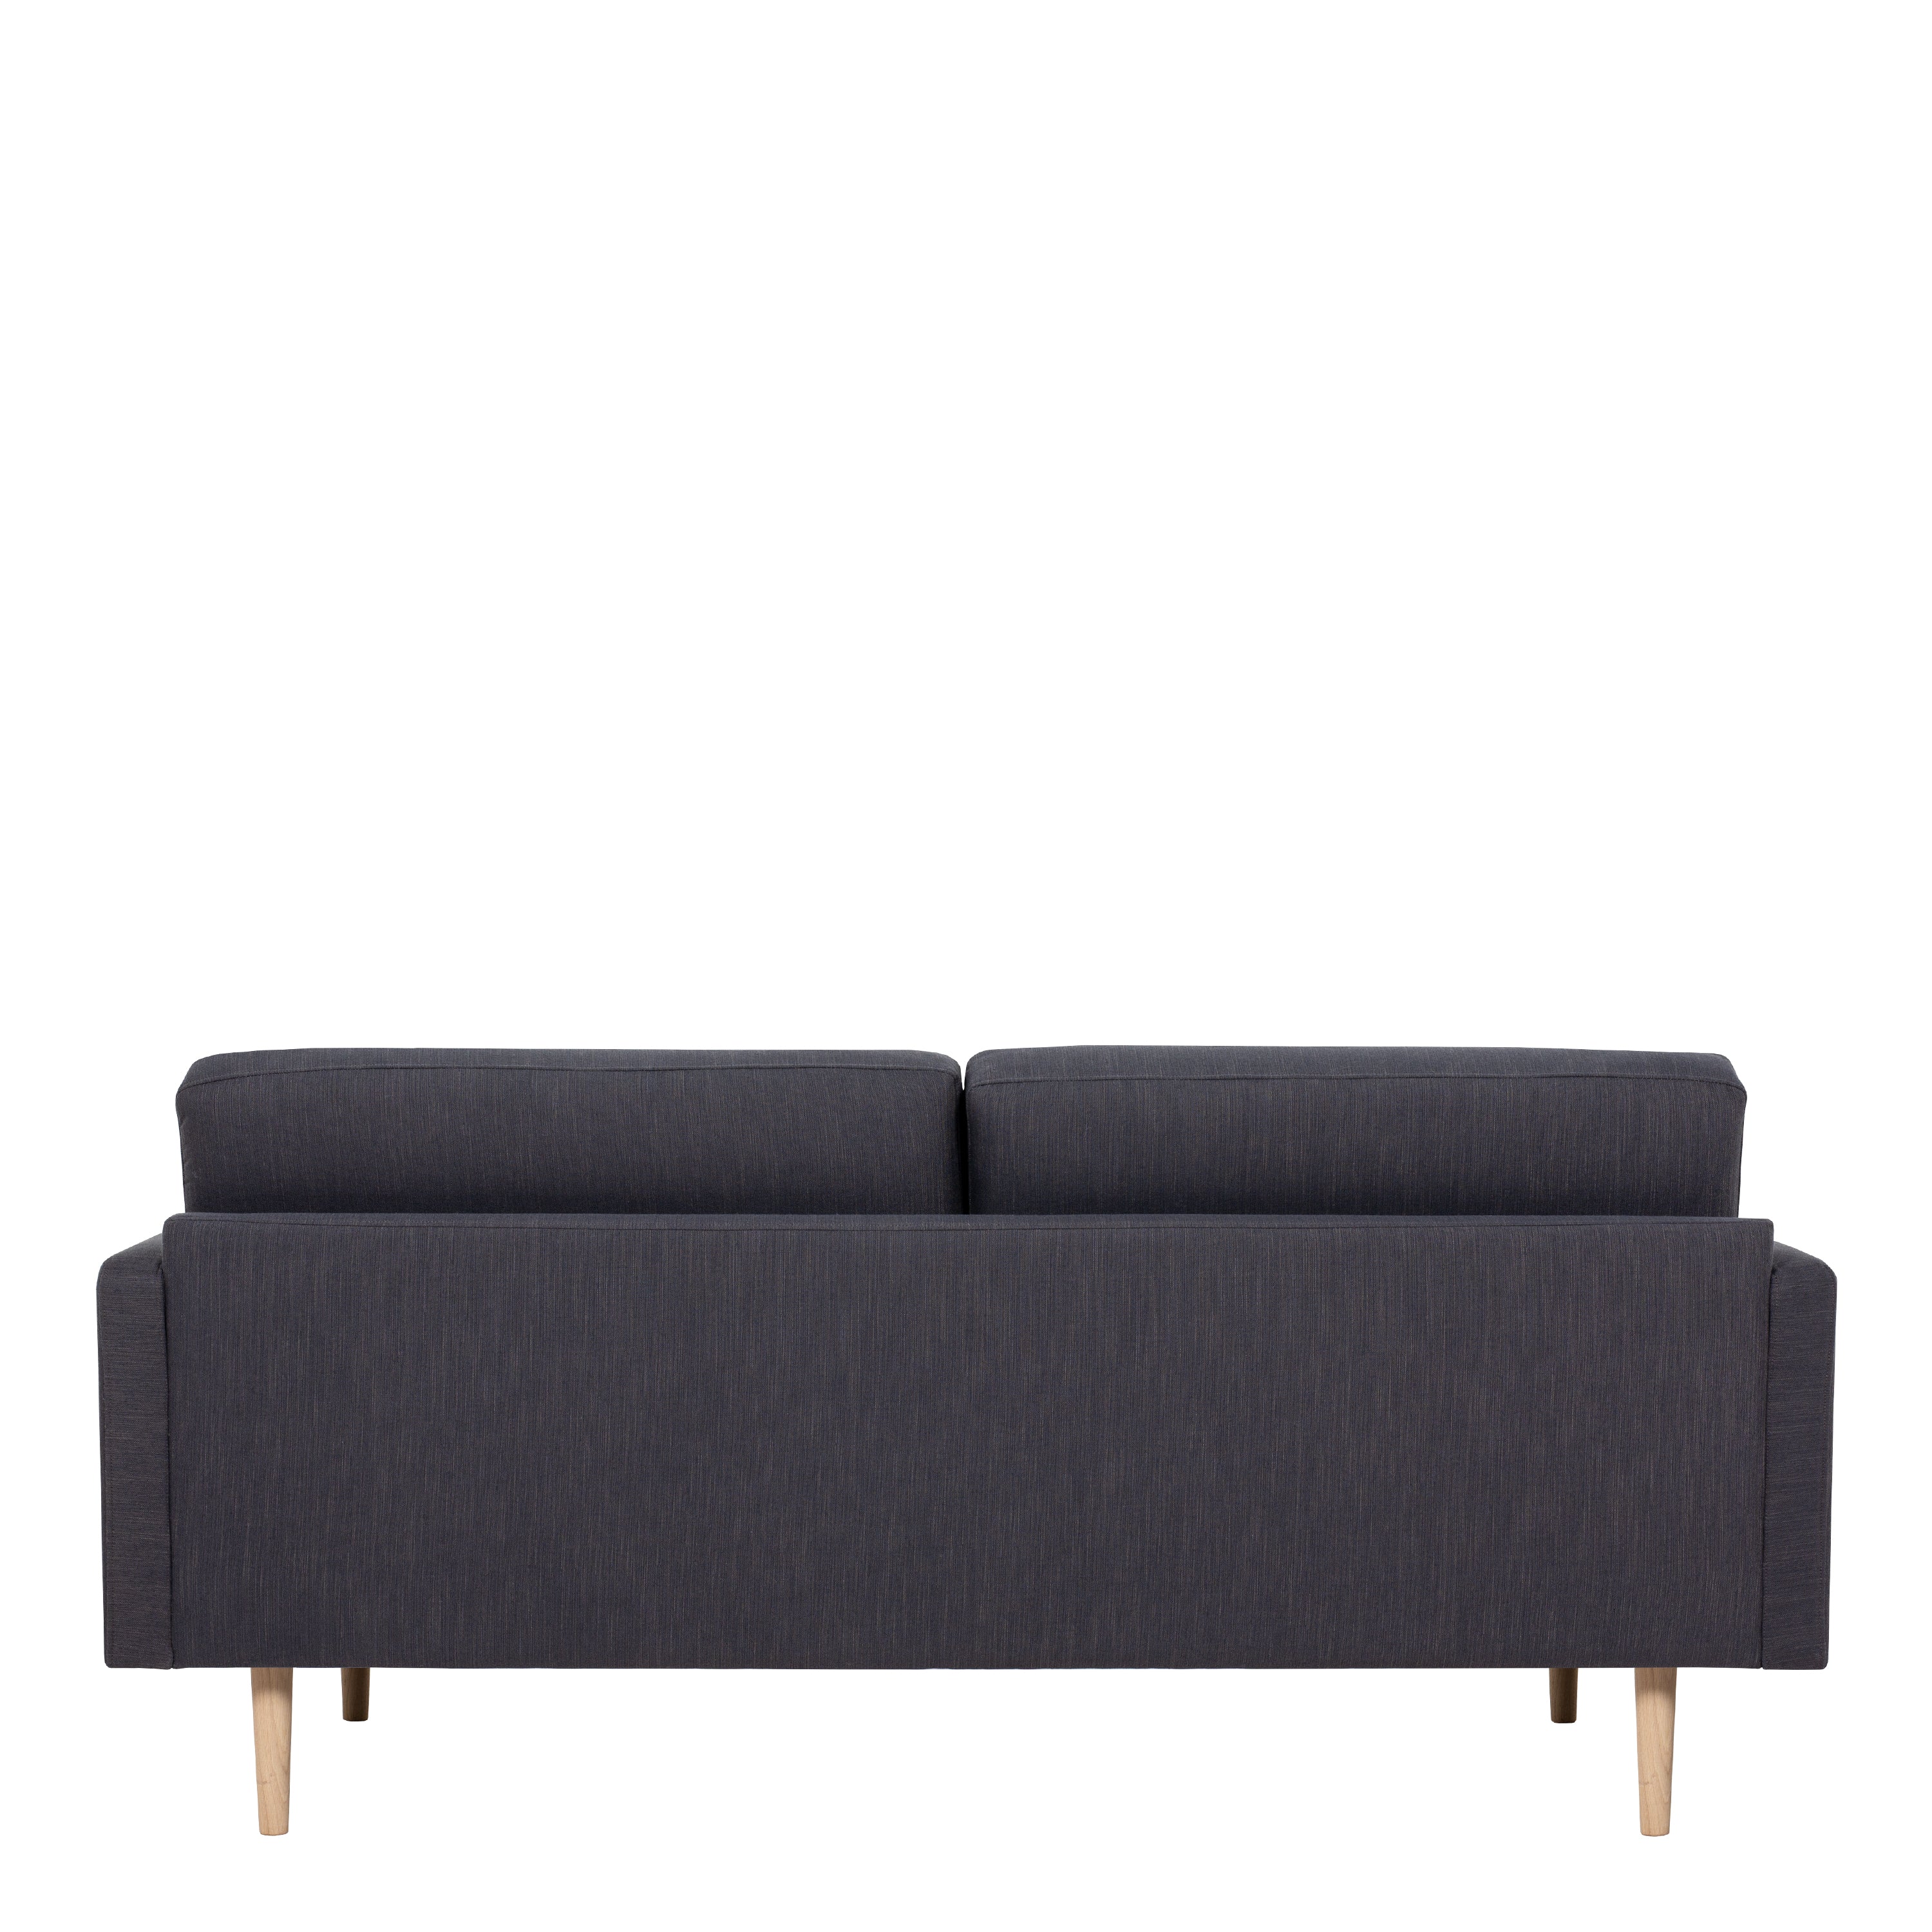 Larvik 2.5 Seater Sofa - Anthracite, Oak Legs